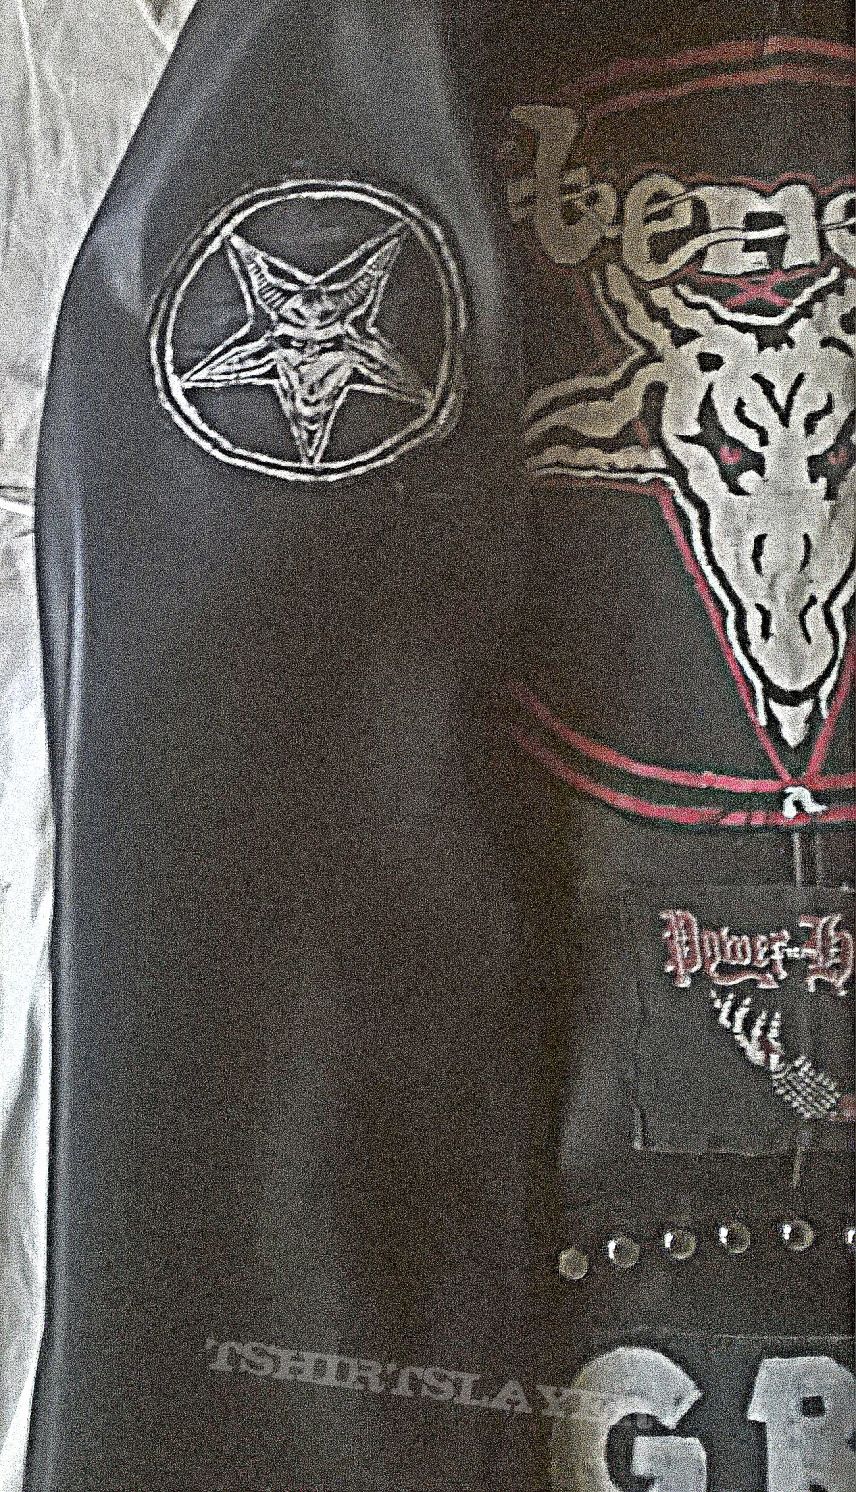 Venom messiah of evil leather jacket